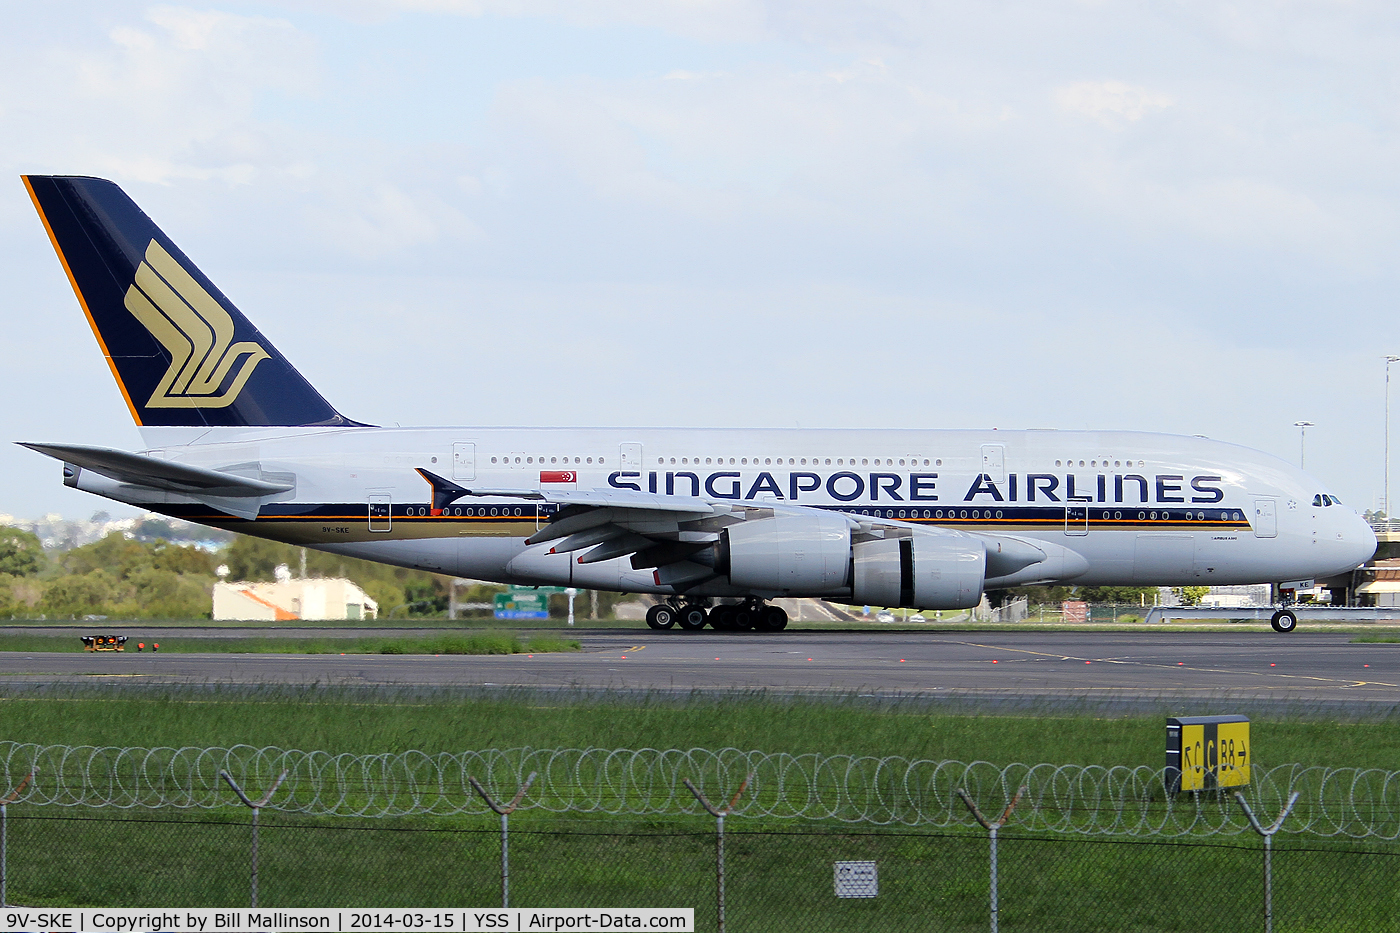 9V-SKE, 2007 Airbus A380-841 C/N 010, arrived from SIN